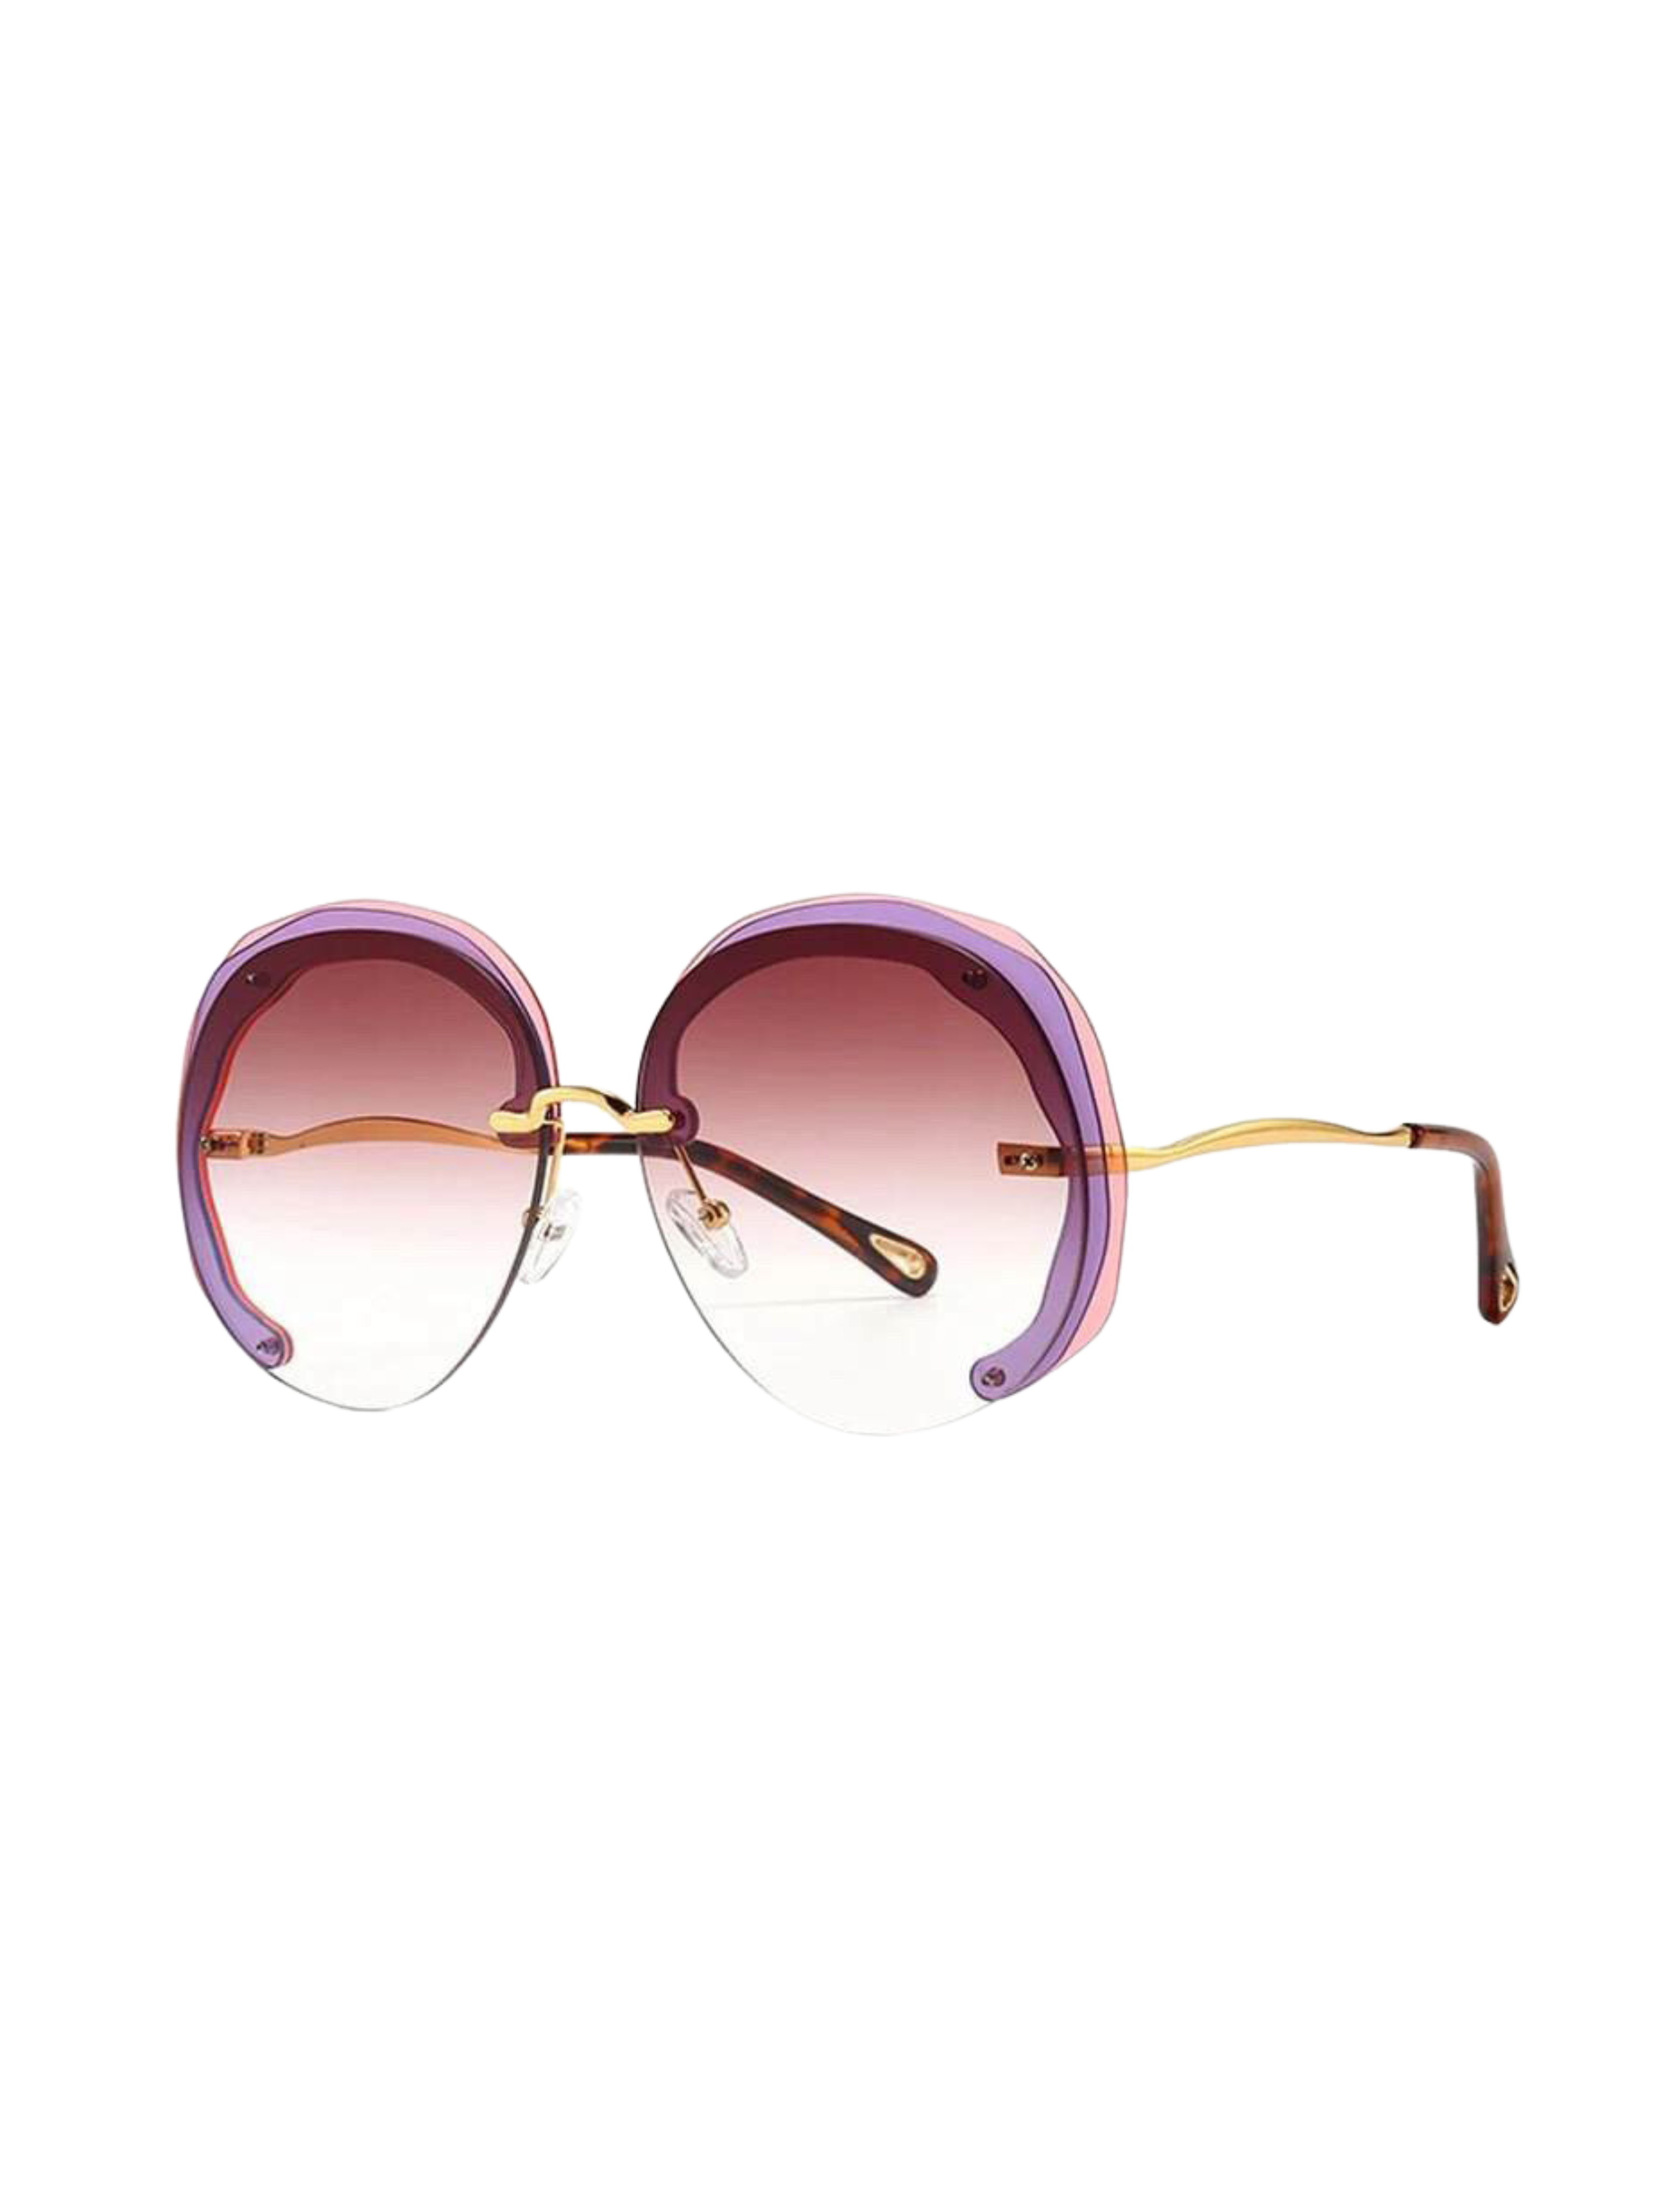 GOLDxTEAL stylish oversized rimless sunglasses.